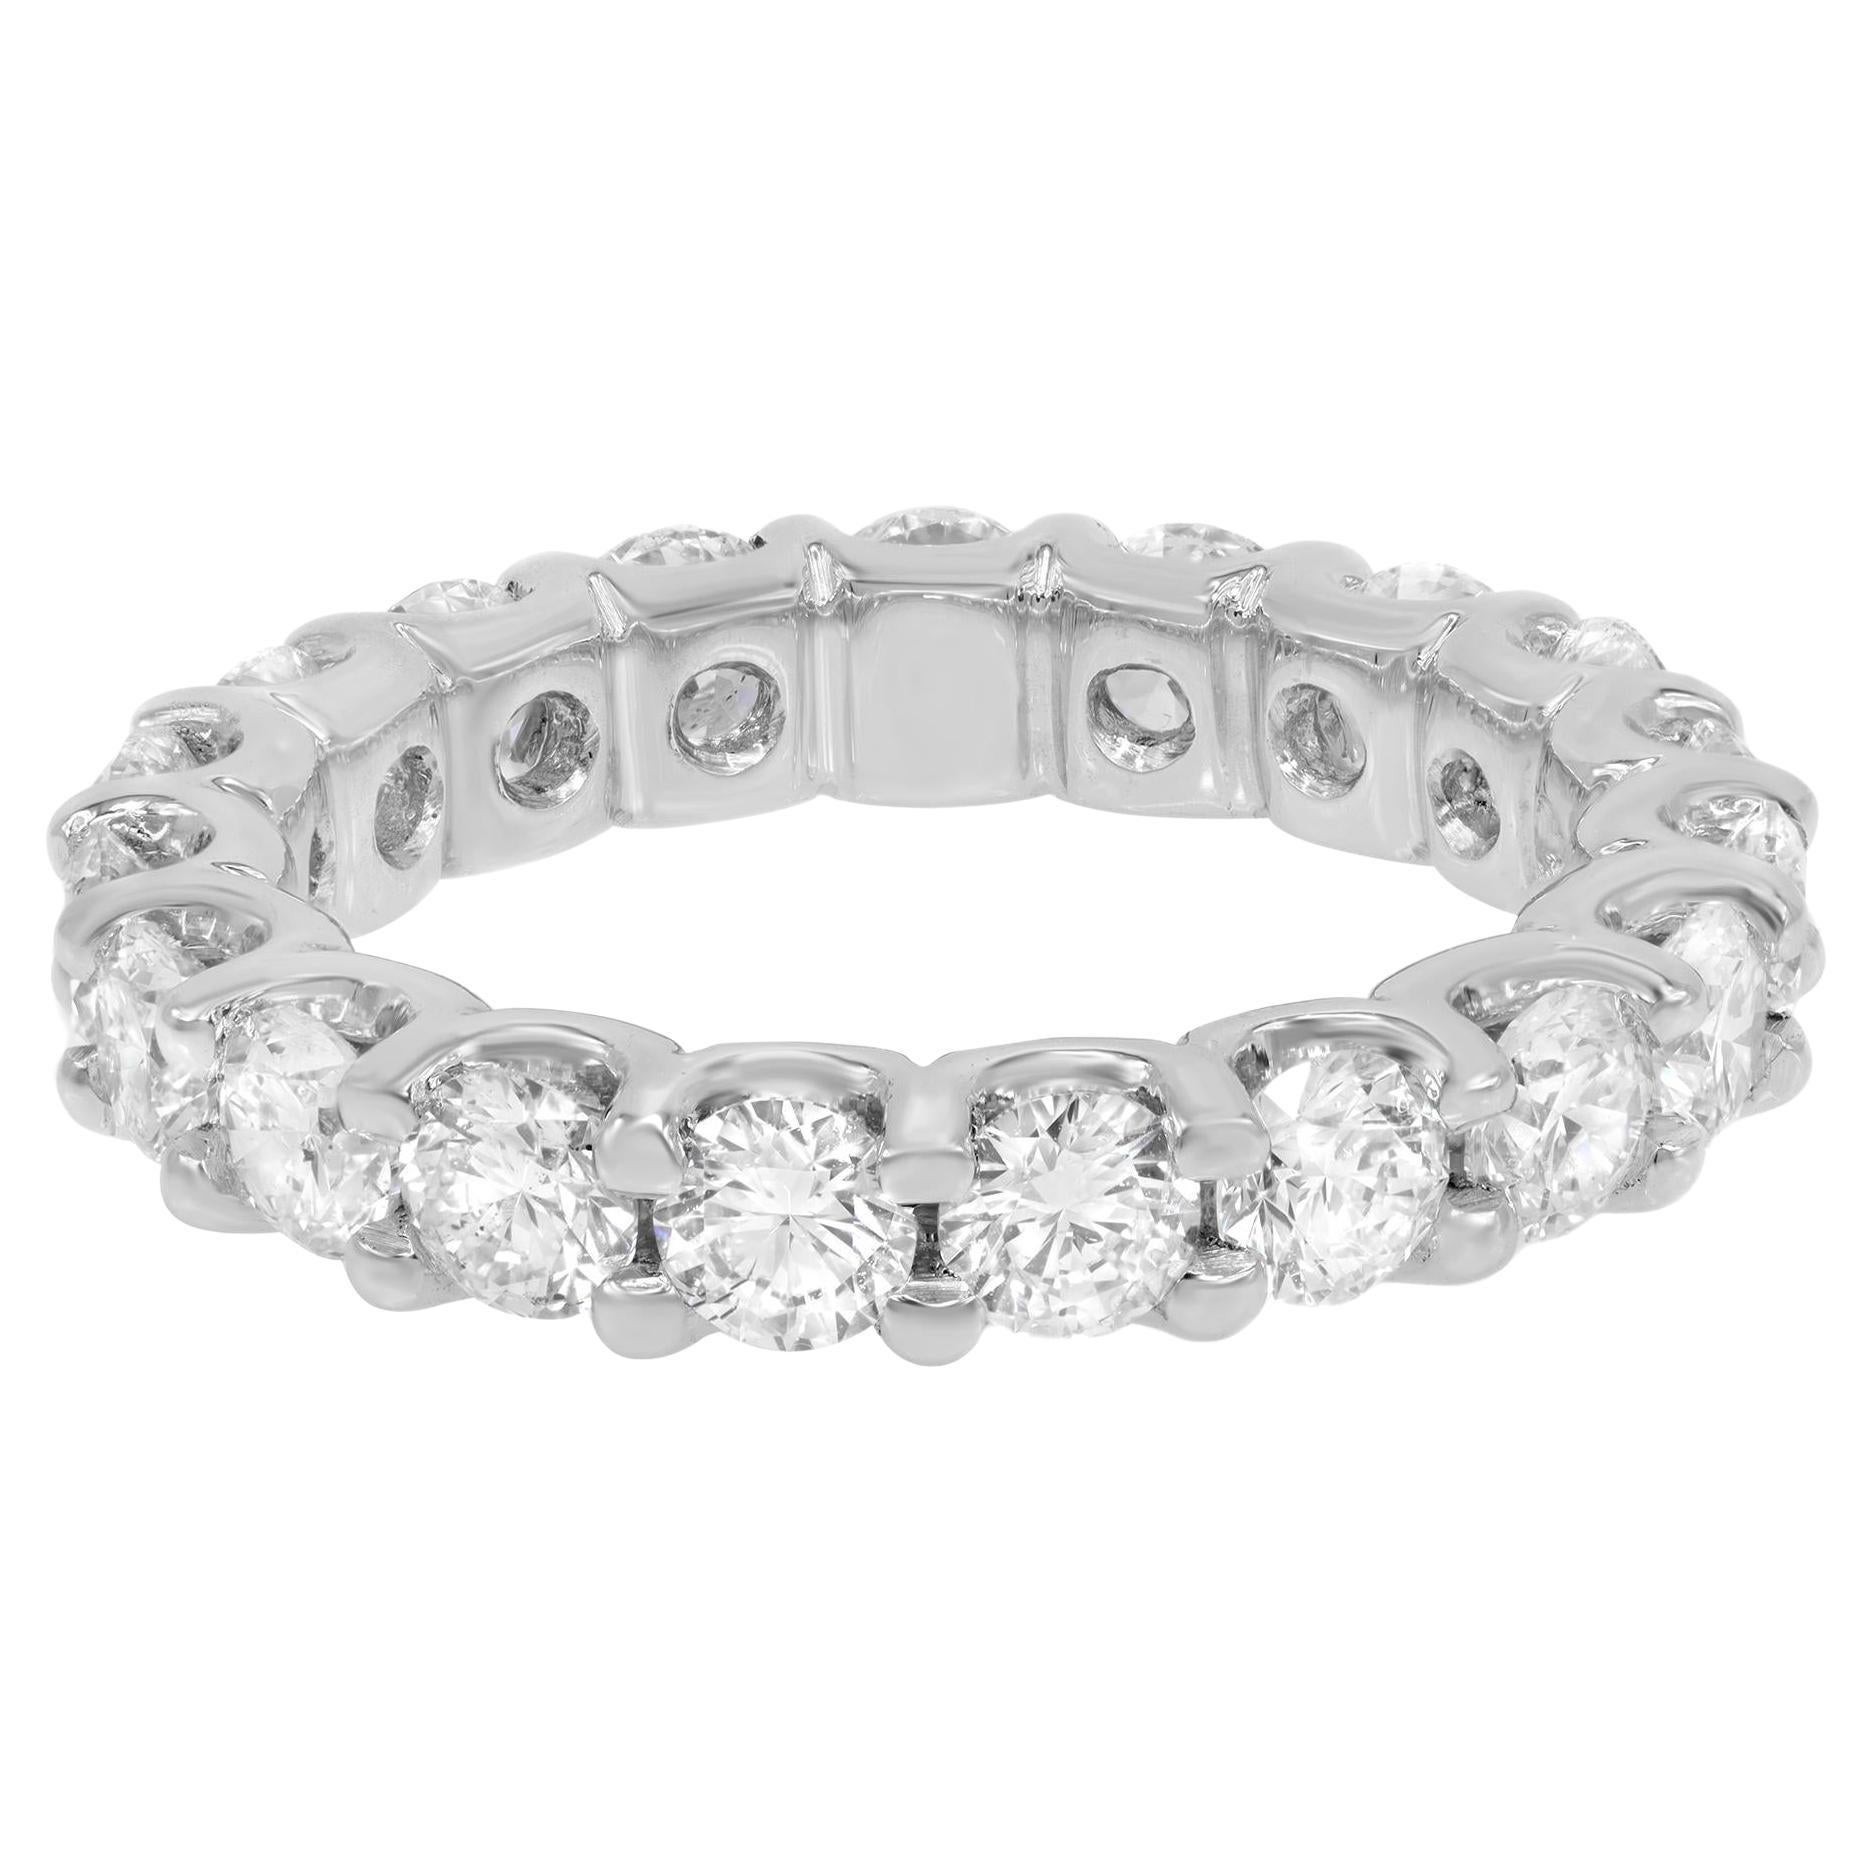 Rachel Koen Round Cut Diamond Eternity Wedding Band Ring 18K White Gold 2.89cttw For Sale